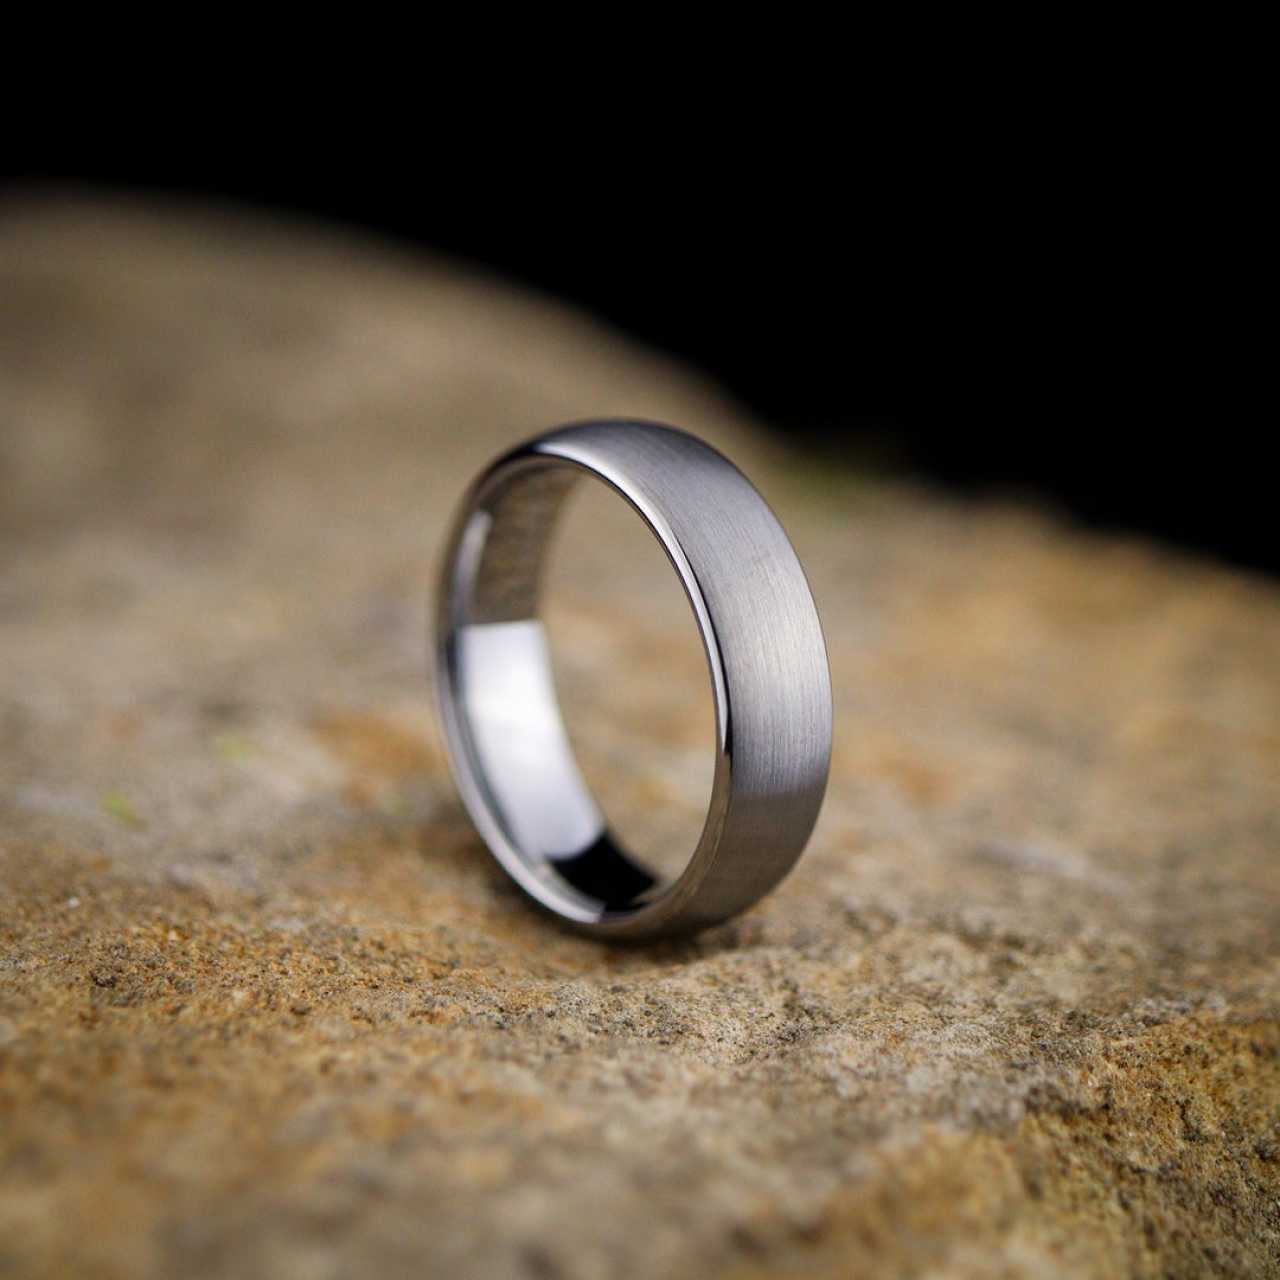 Flinn & Steel rings